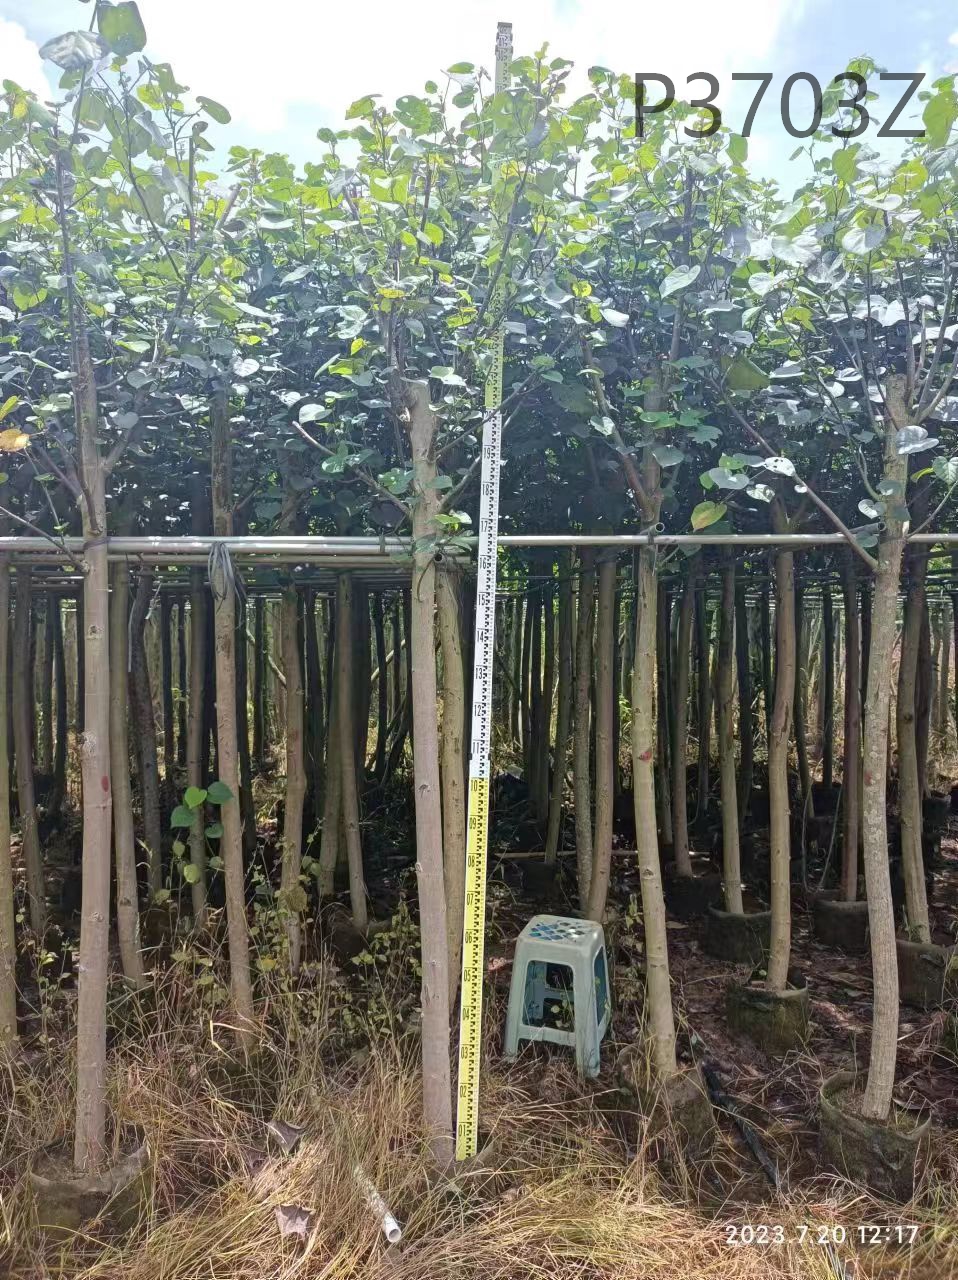 China Supplier Landscape Tree Hibiscus Tiliaceus Talipariti Tiliaceum With Good Price